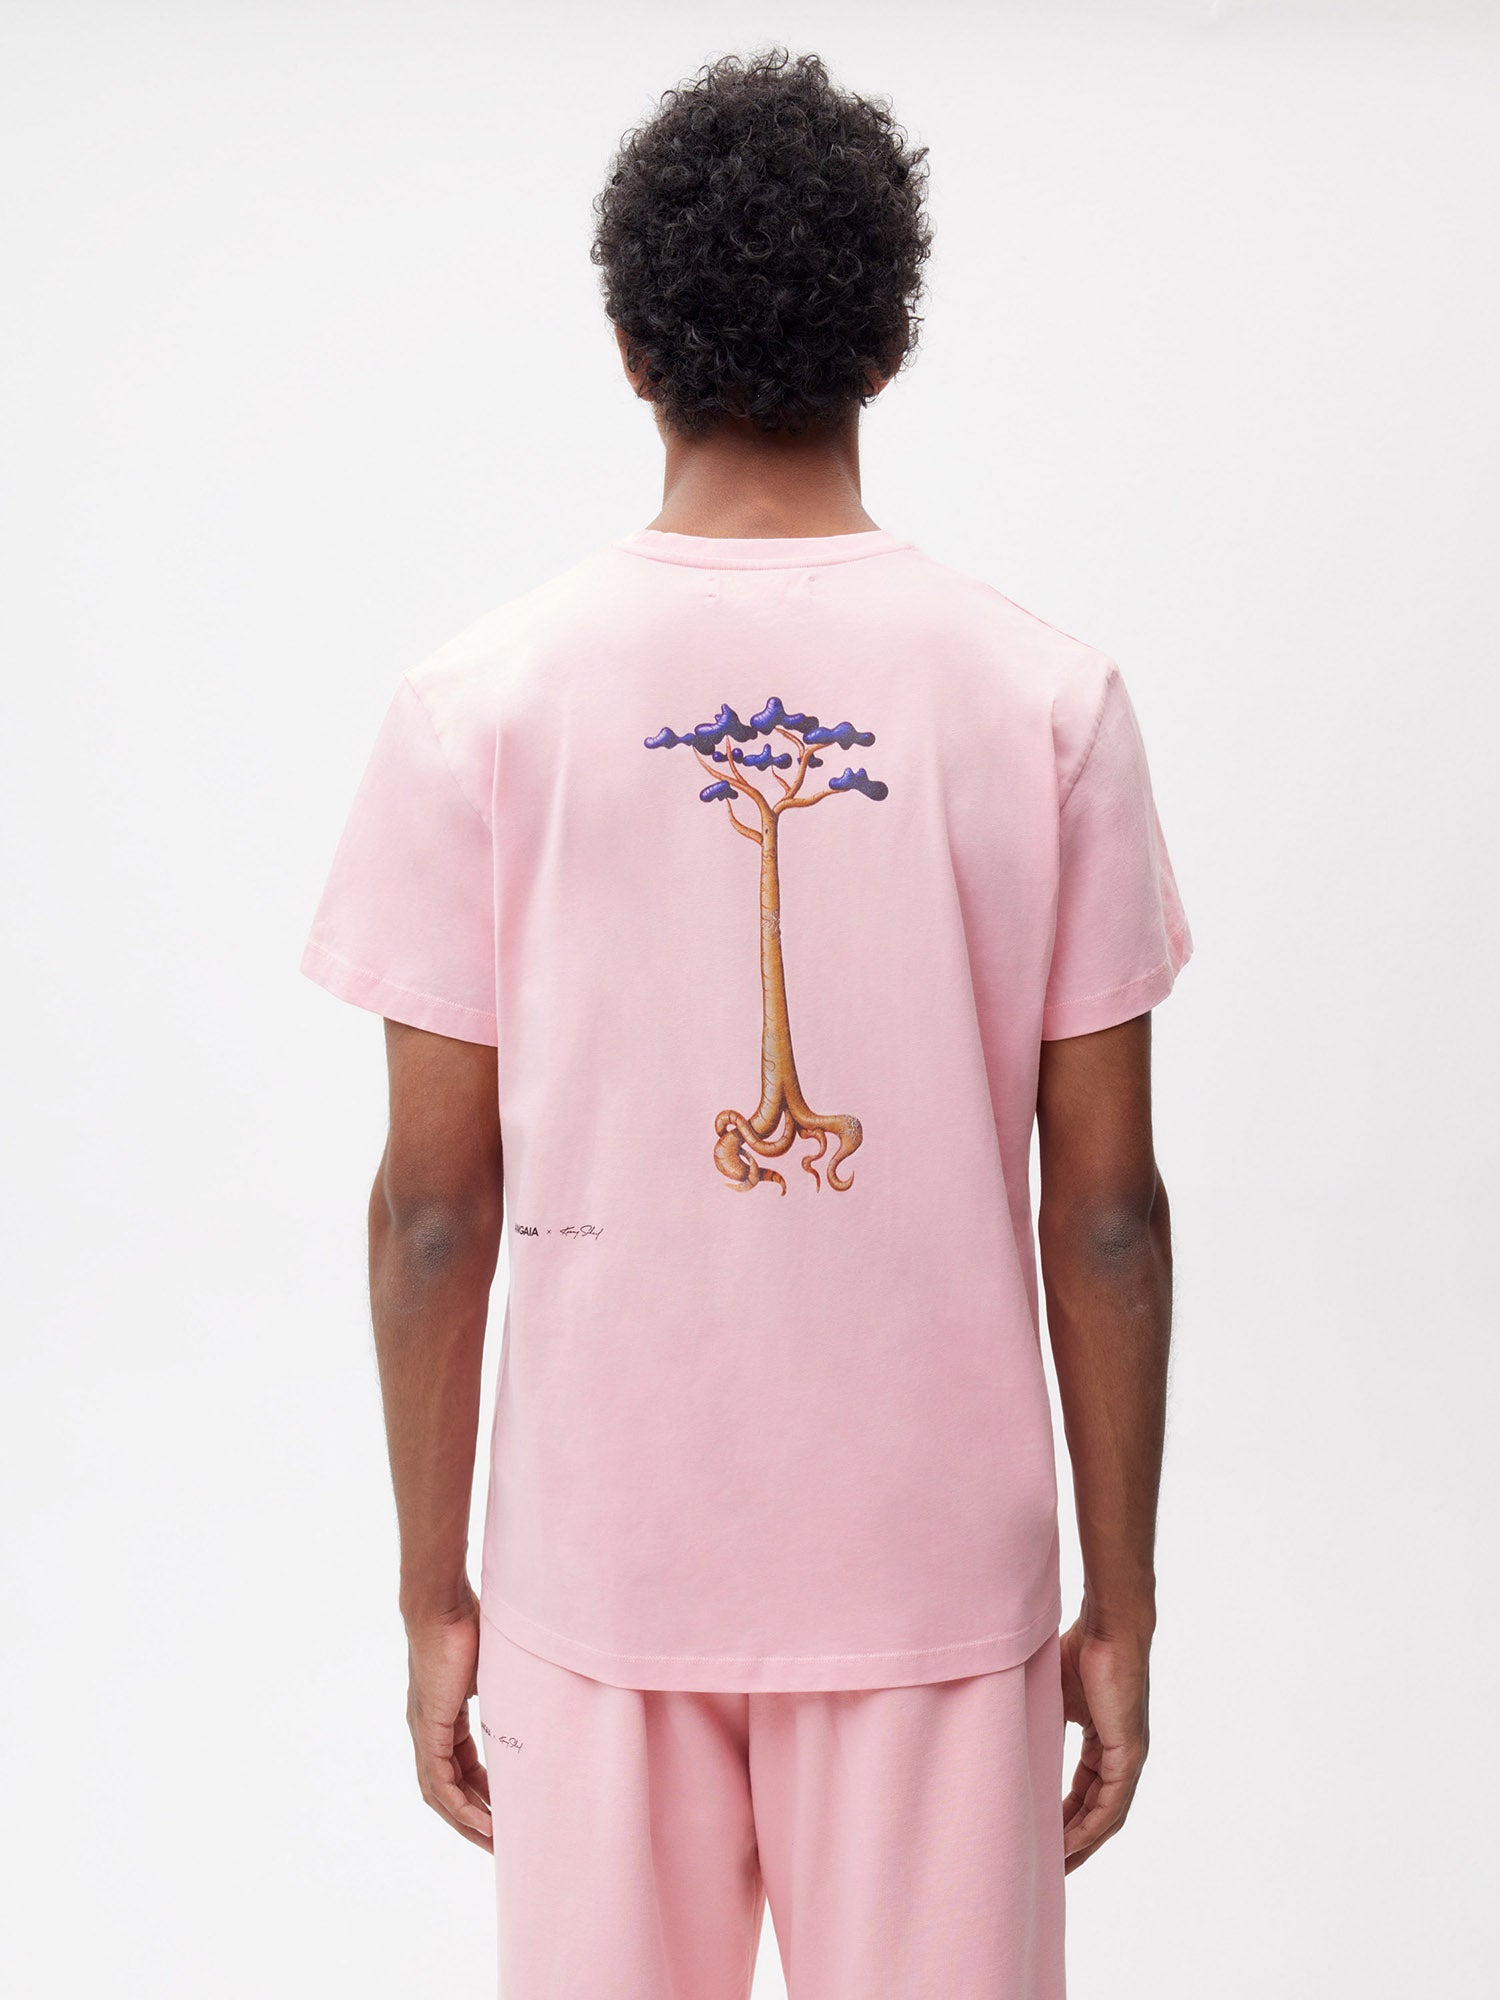 Pangaia-Kenny-Scharf-Organic-Cotton-T-Shirt-Swamp-Style-Sakura-Pink-Male-2